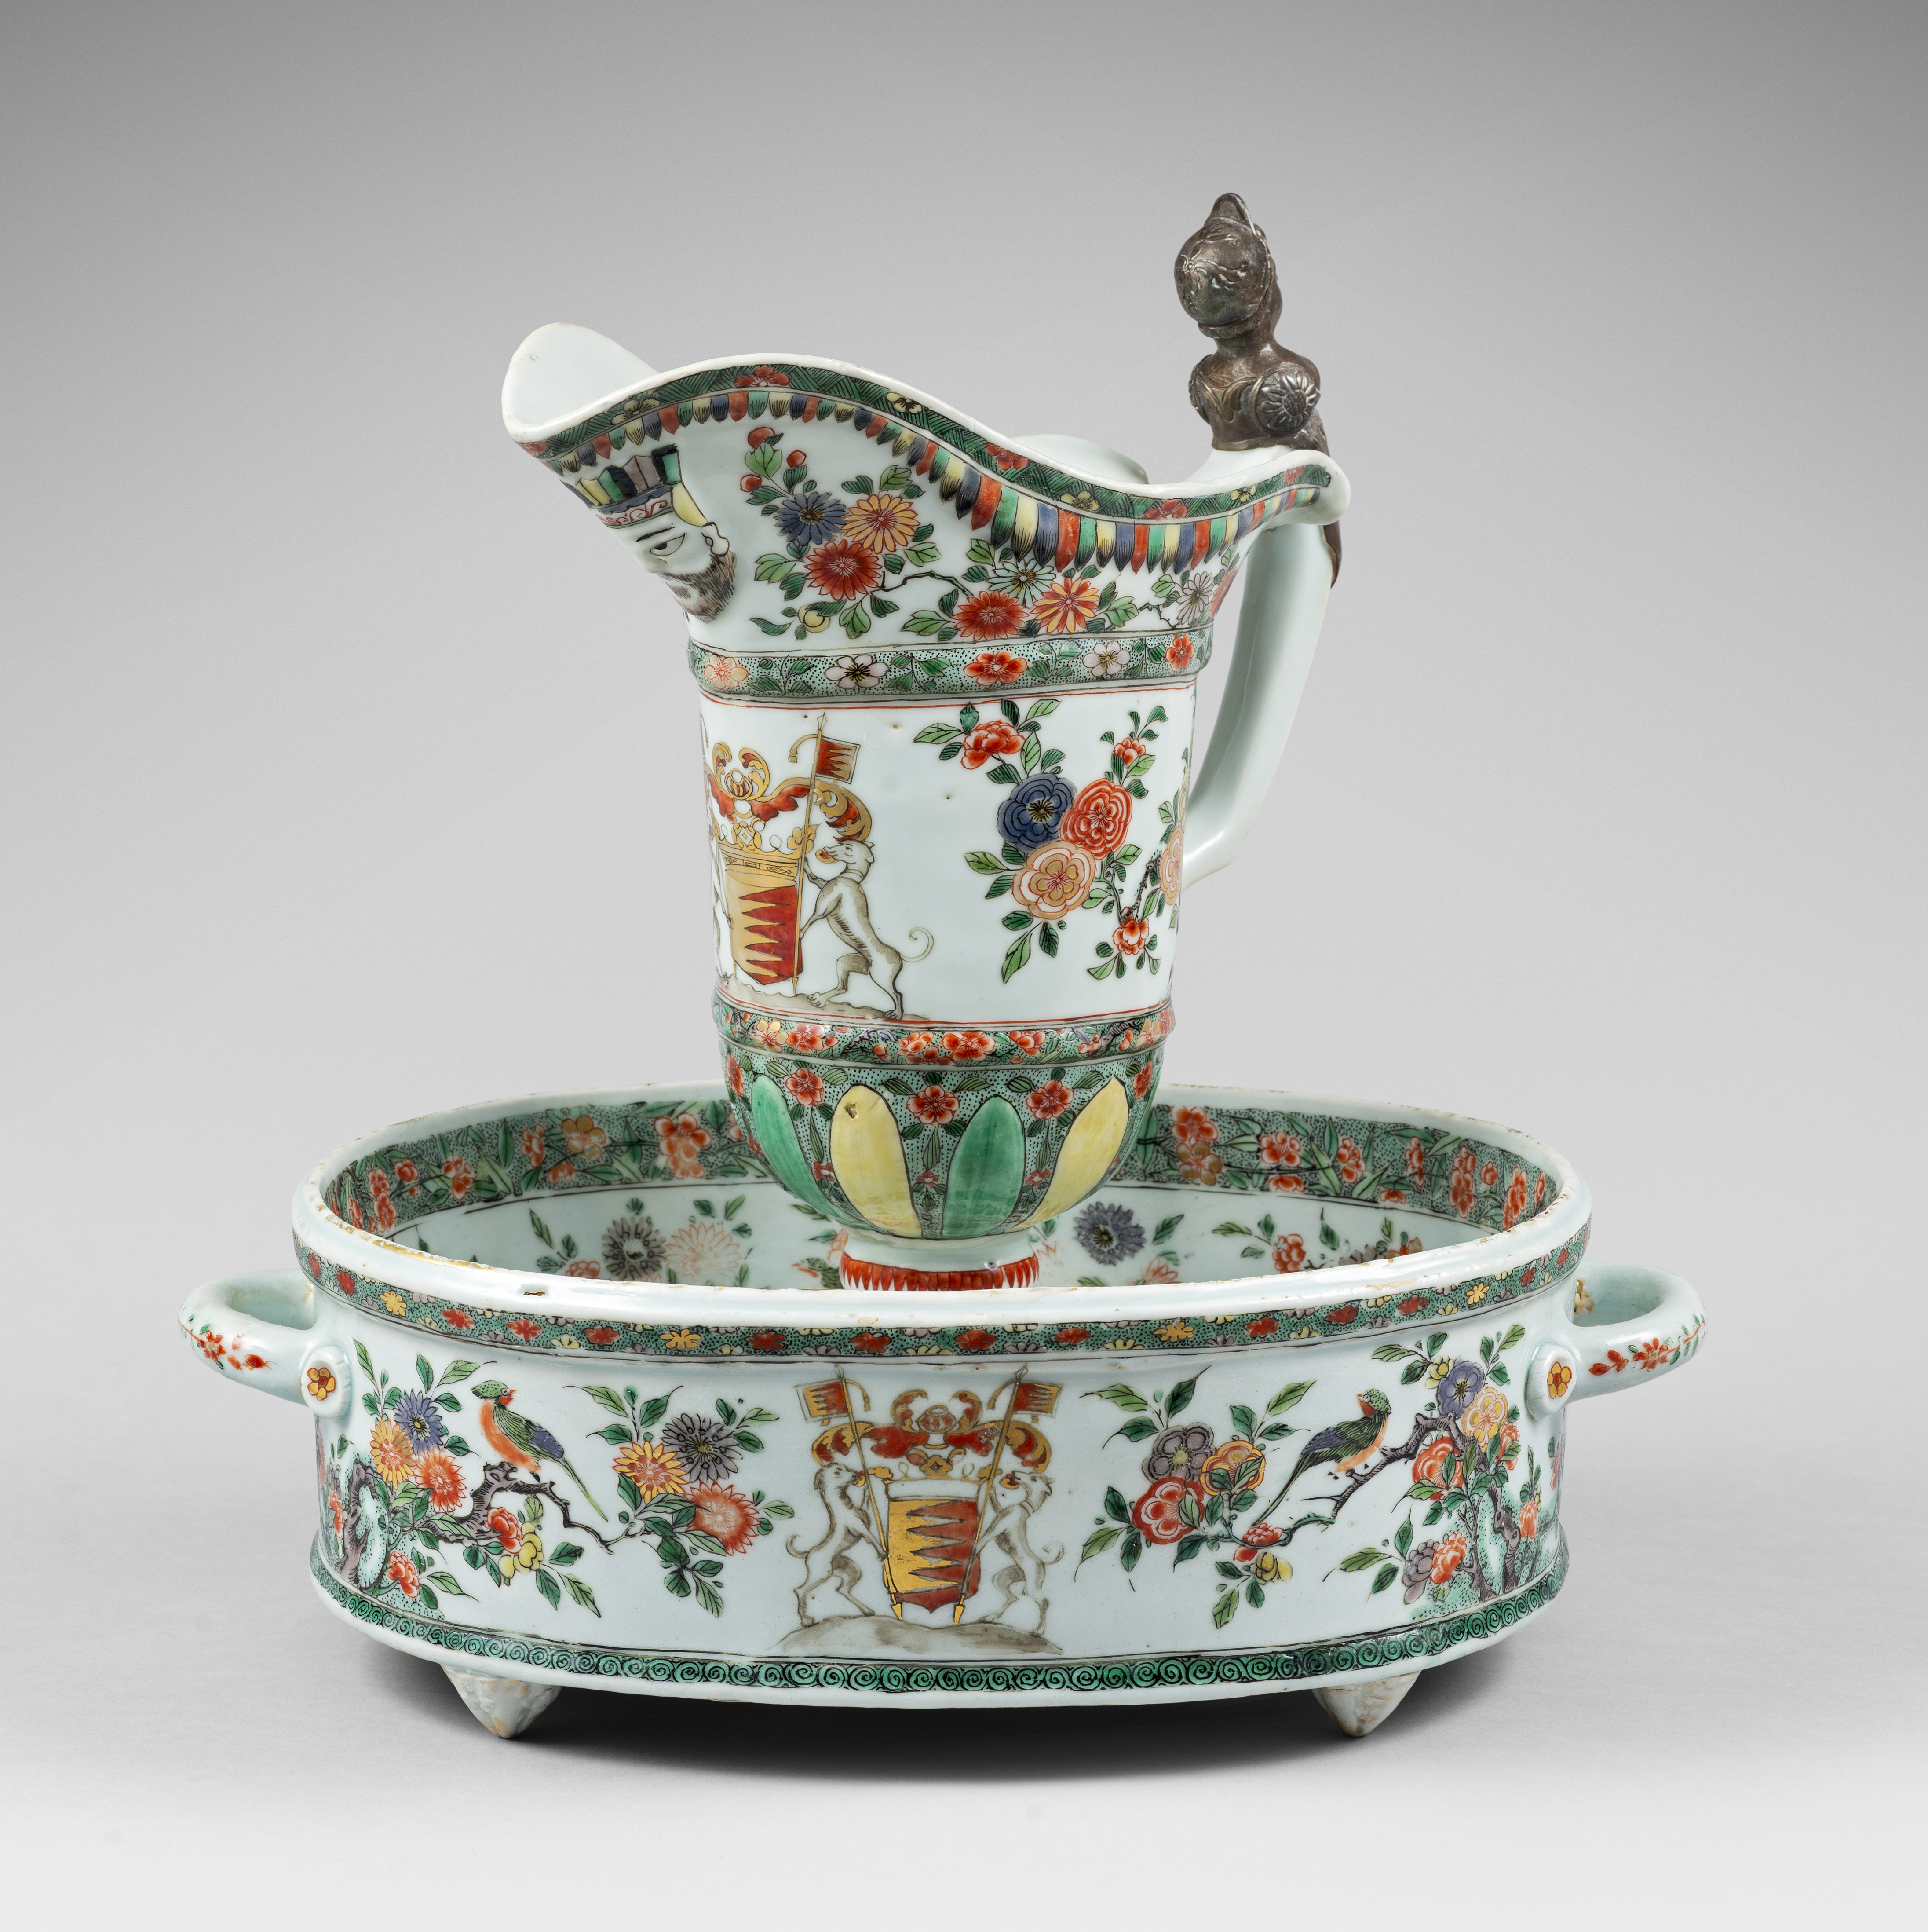 Famille verte Porcelain Kangxi period (1662-1722), circa 1720/1725, China